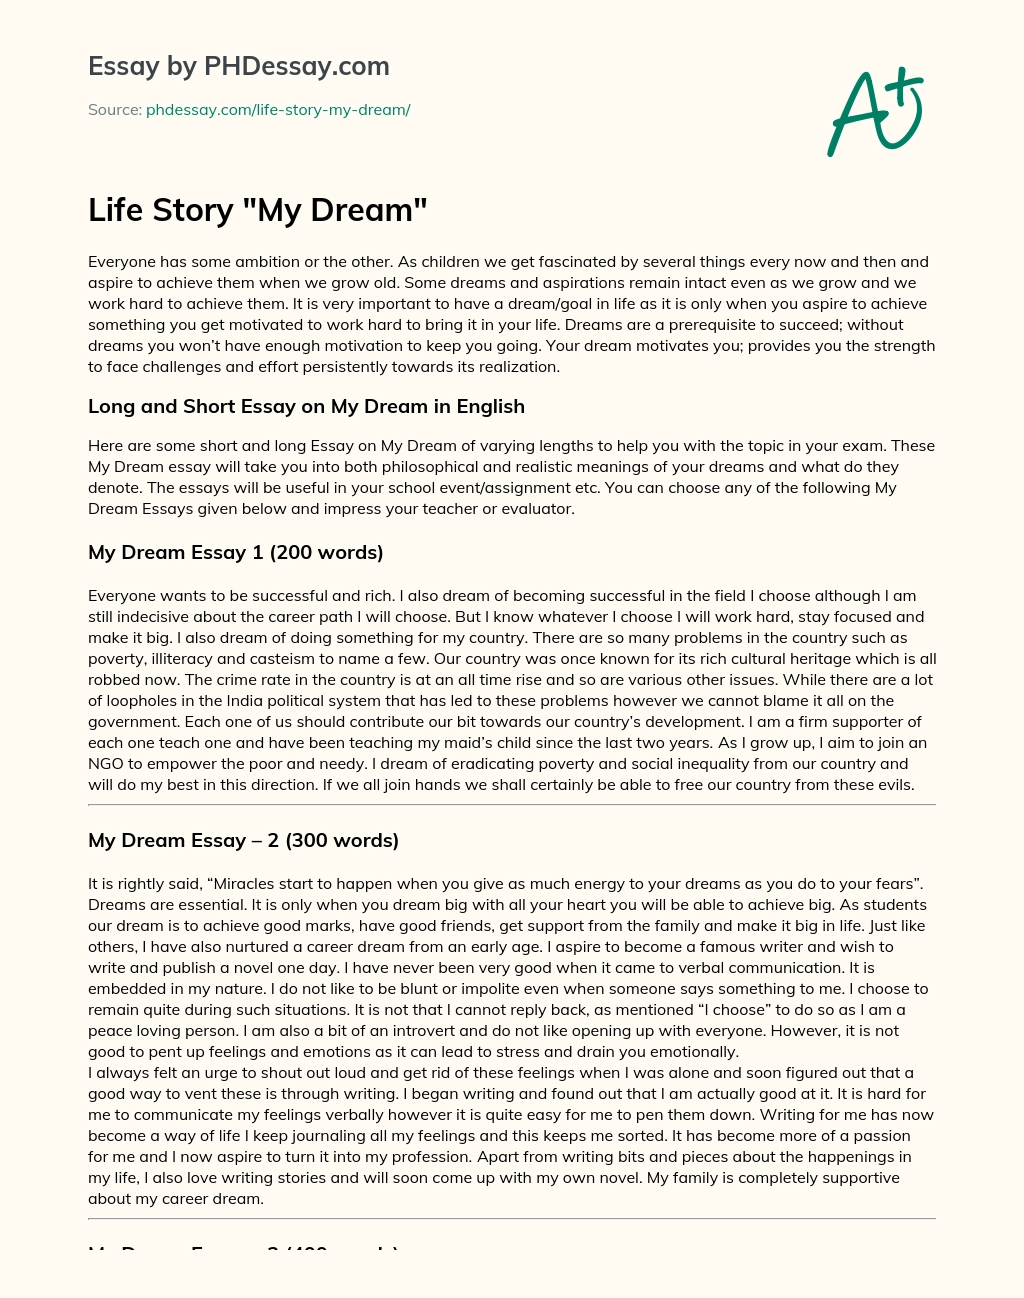 Life Story My Dream essay